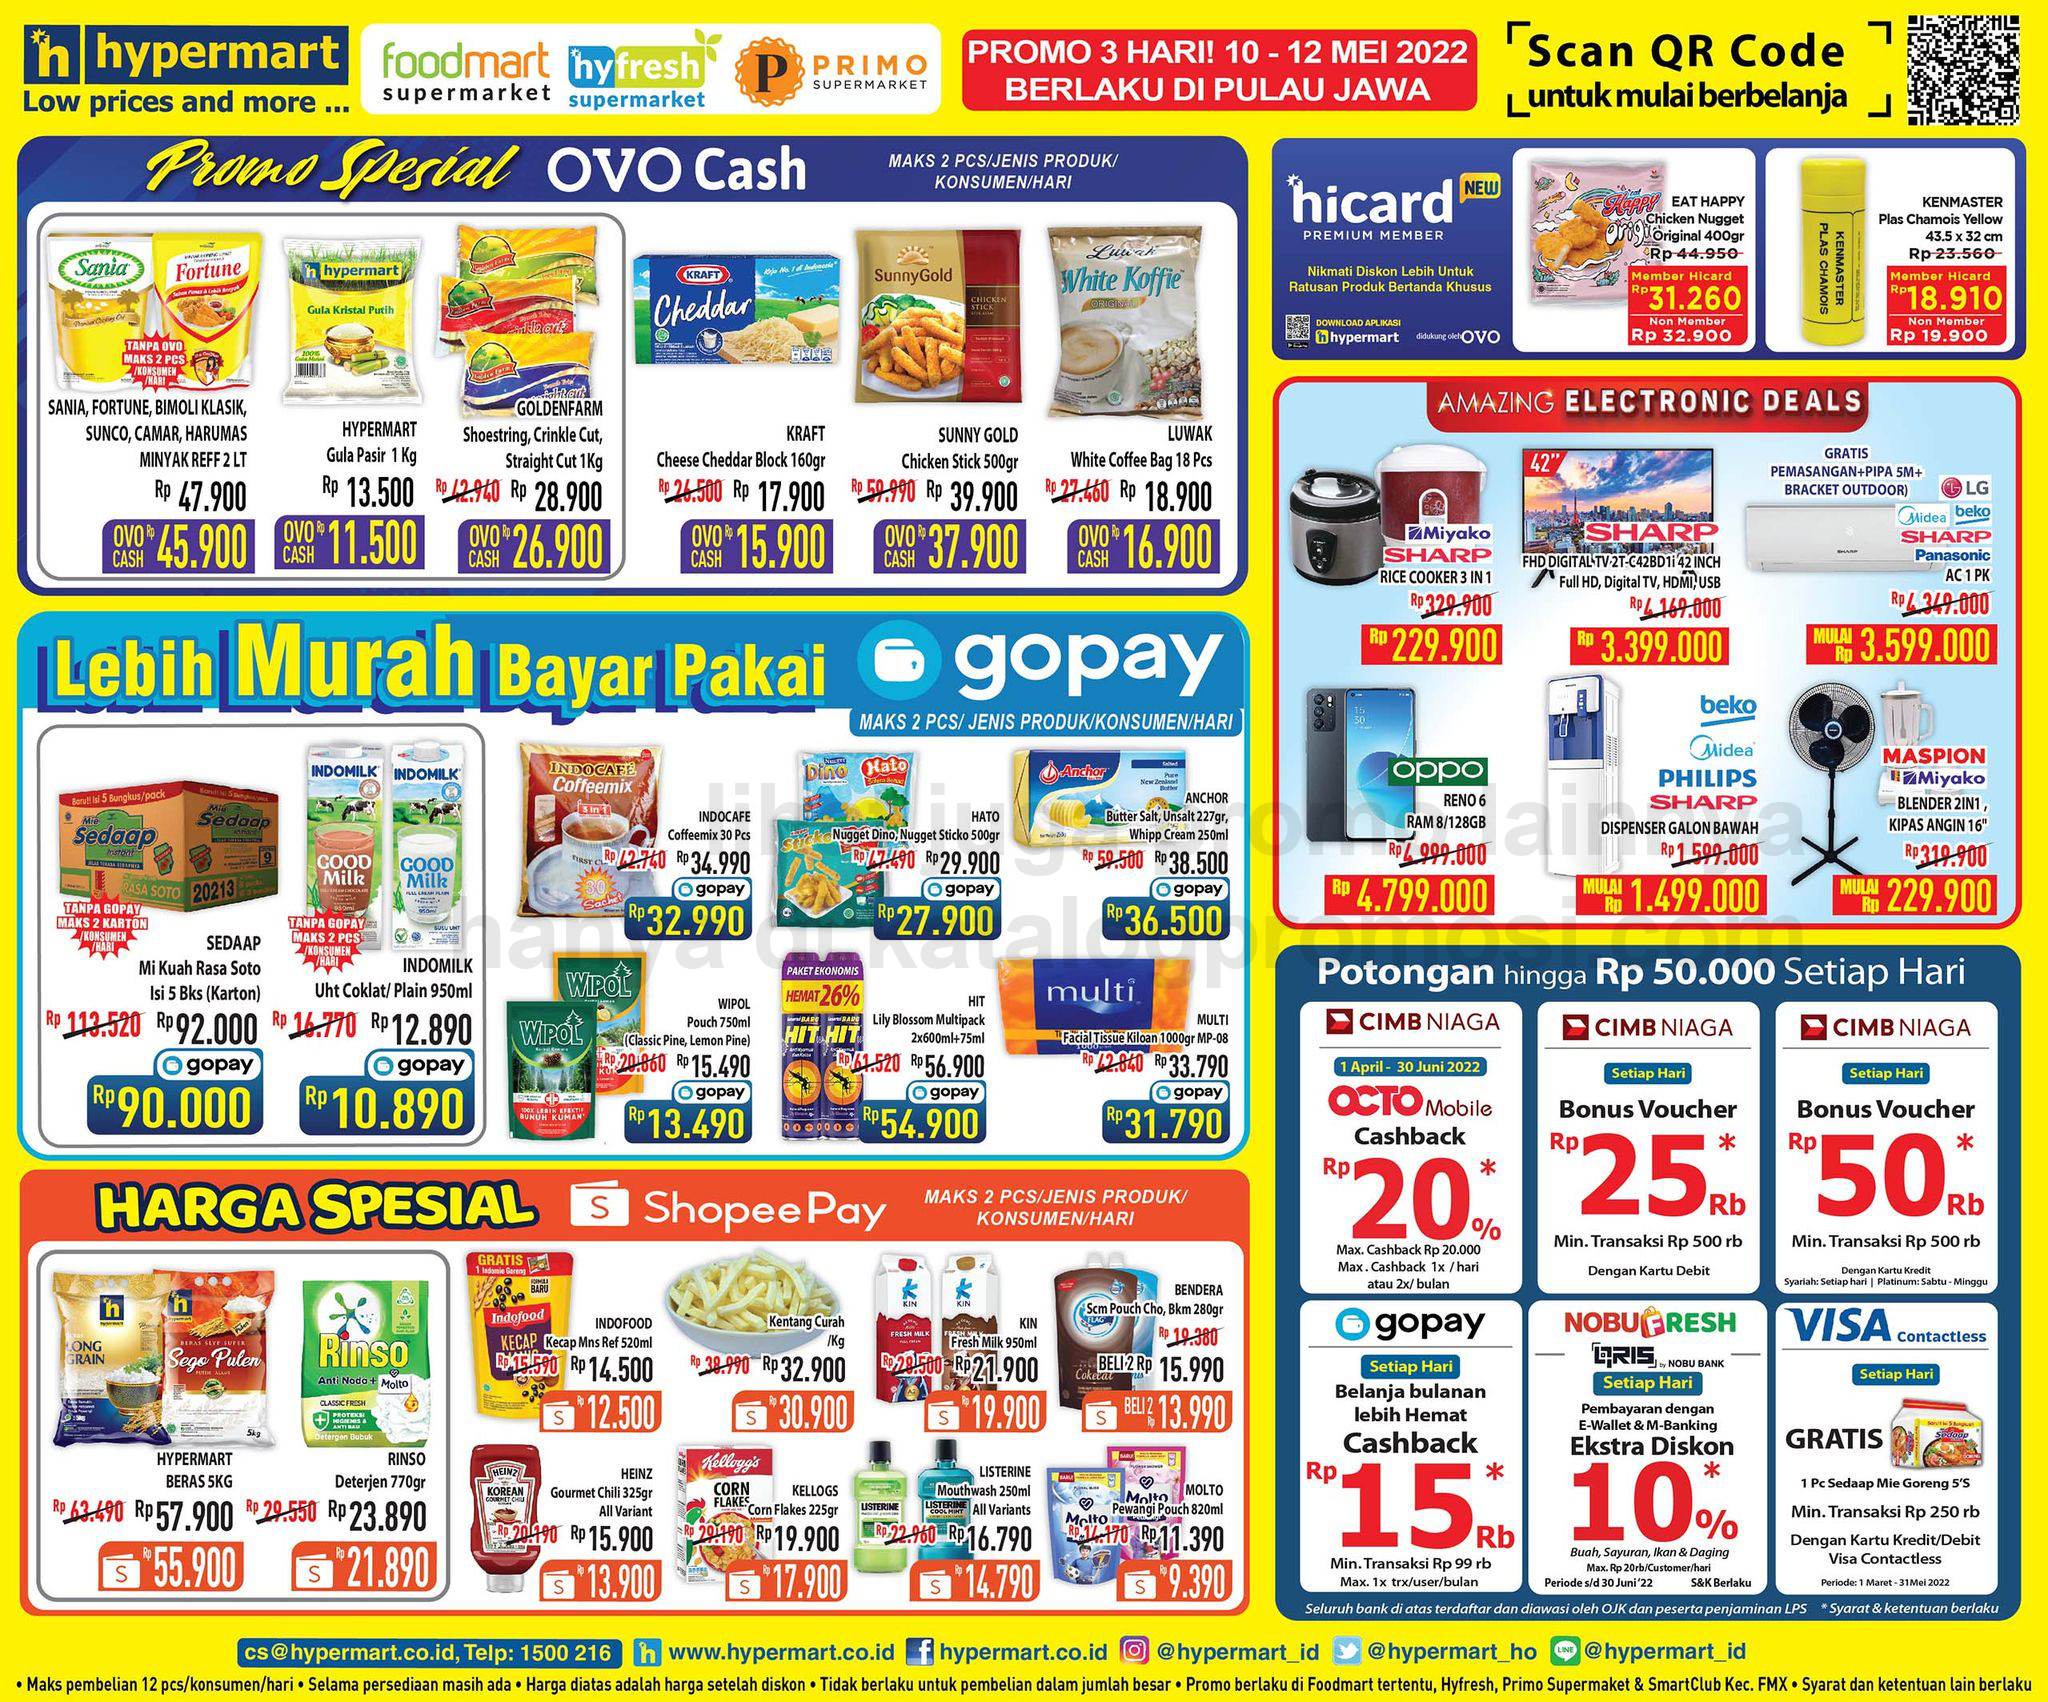 Katalog Hypermart Promo Weekday periode 10-12 MEI 2022